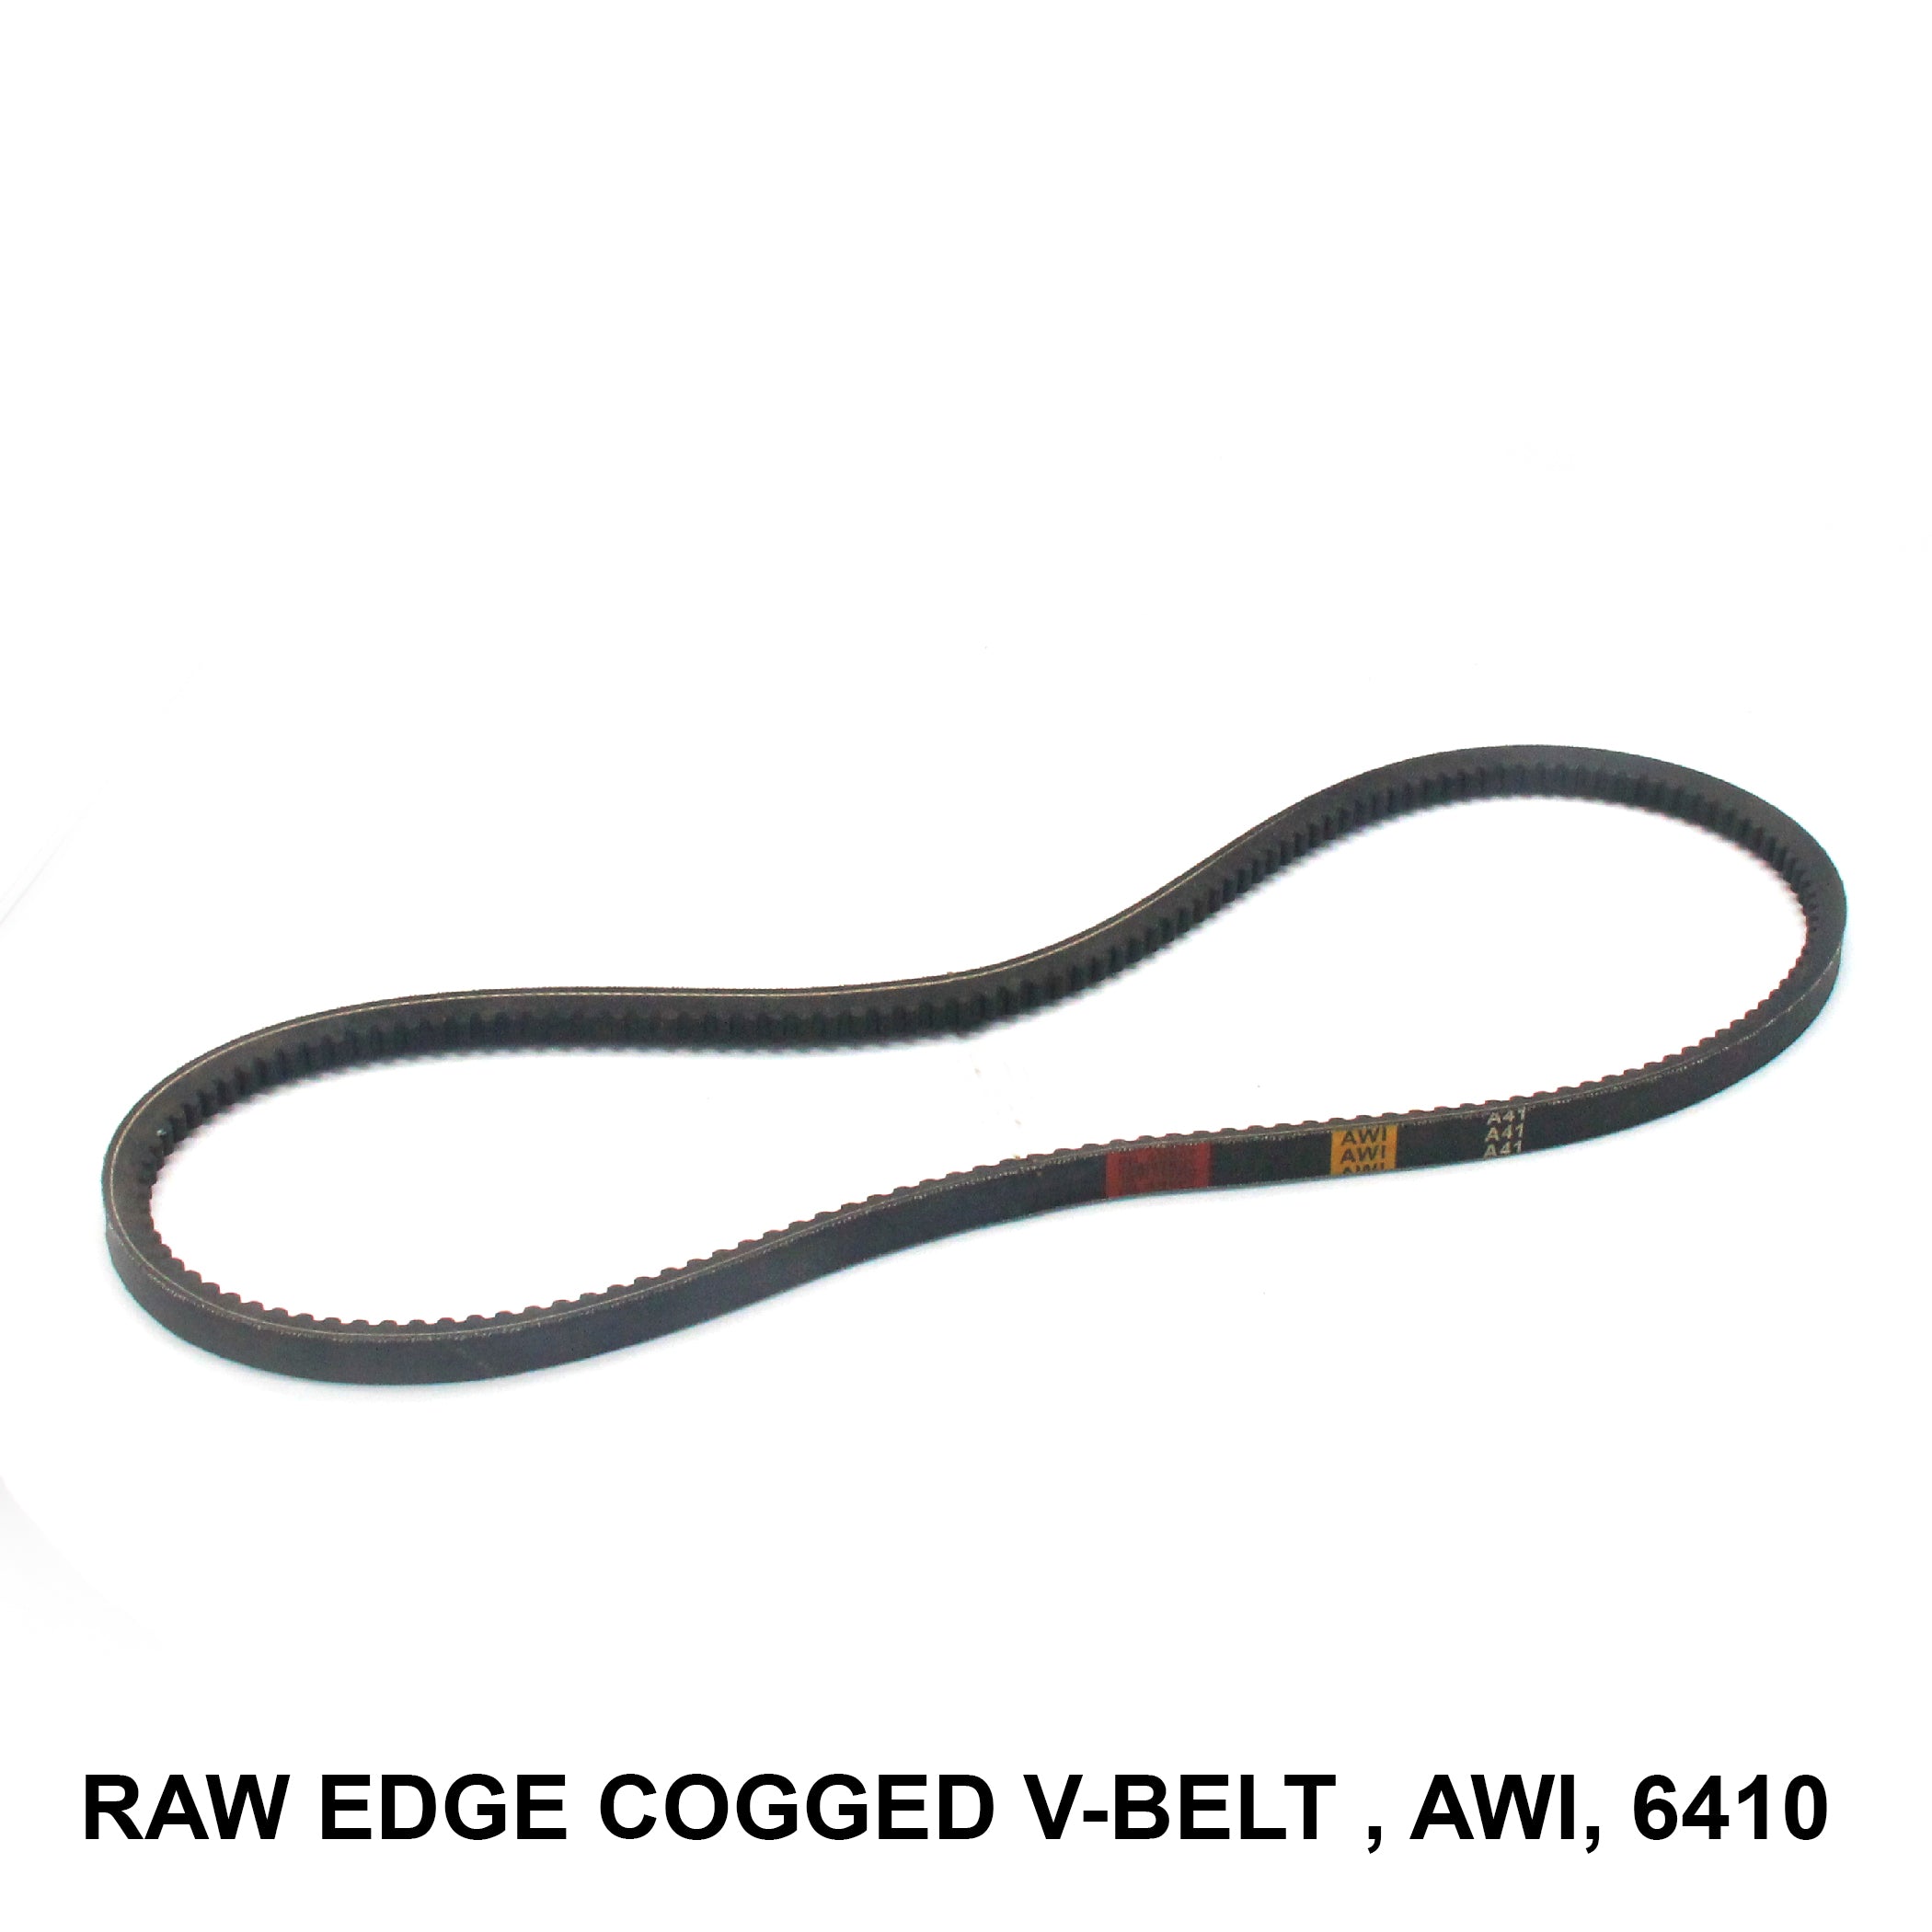 Raw Edge Cogged V-belt (RECMF), AWI, RECMF-6410